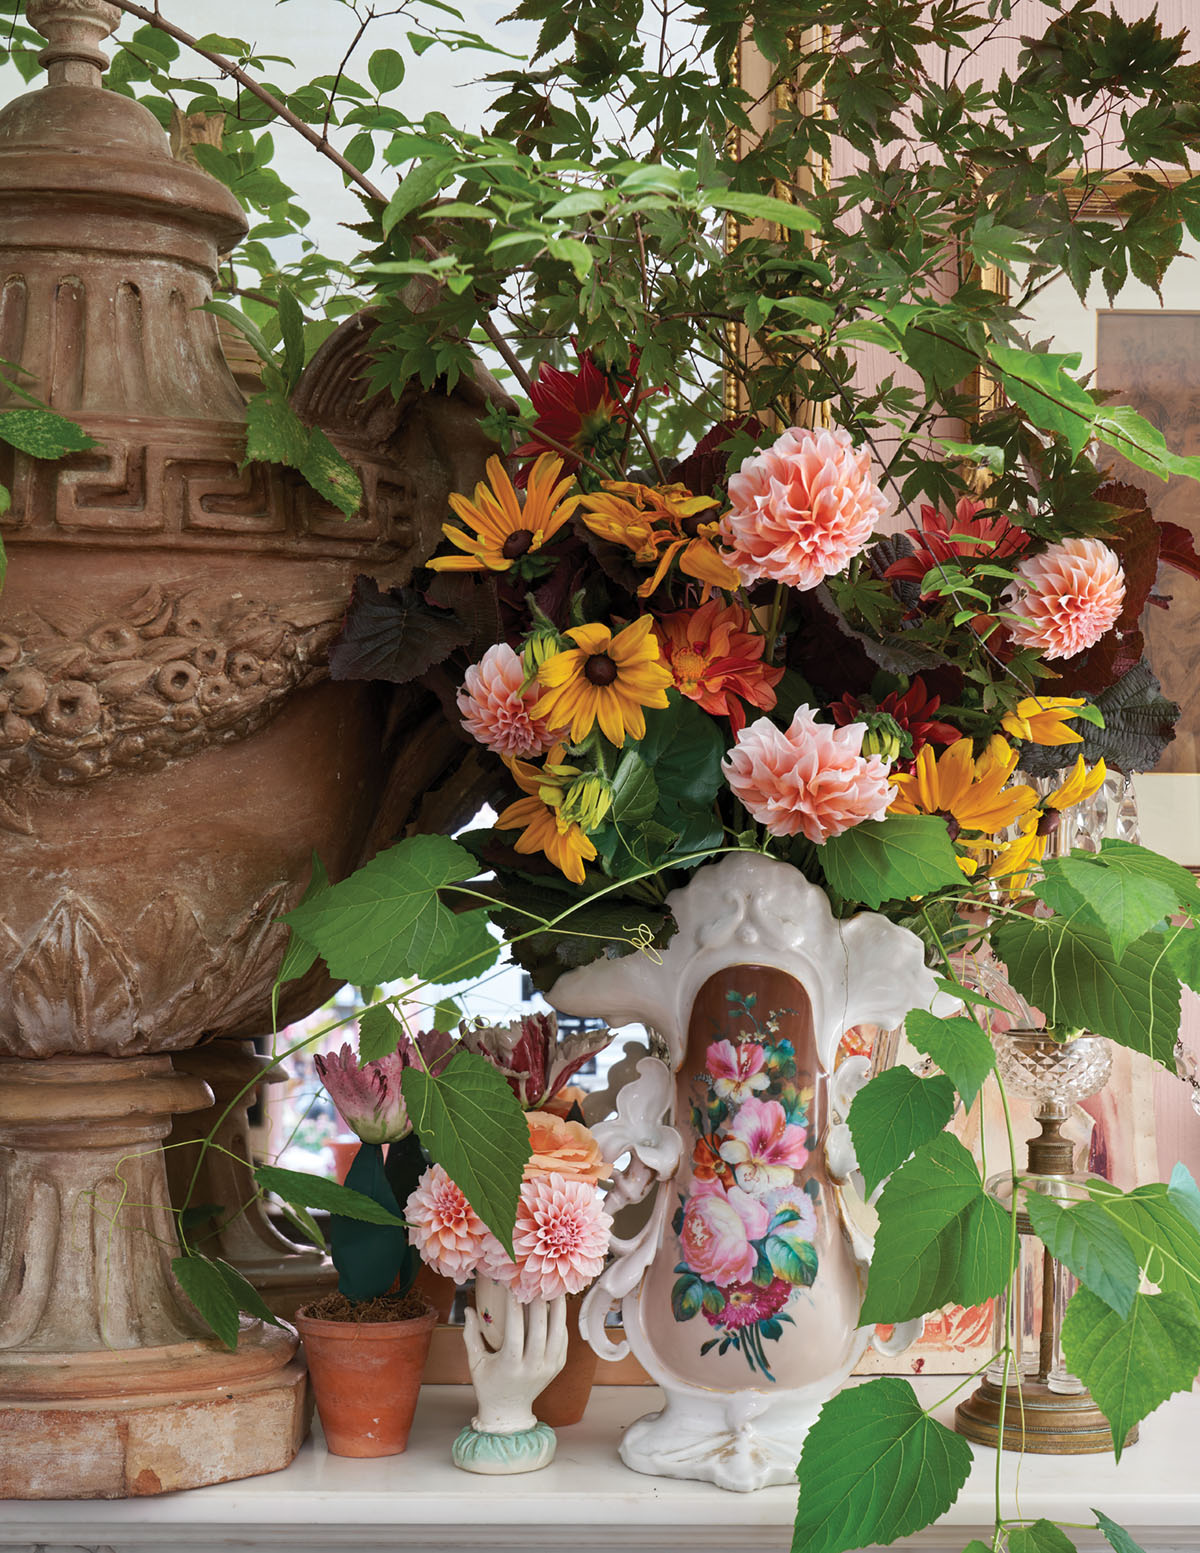 dahlia floral arrangement by Jimmie Henslee